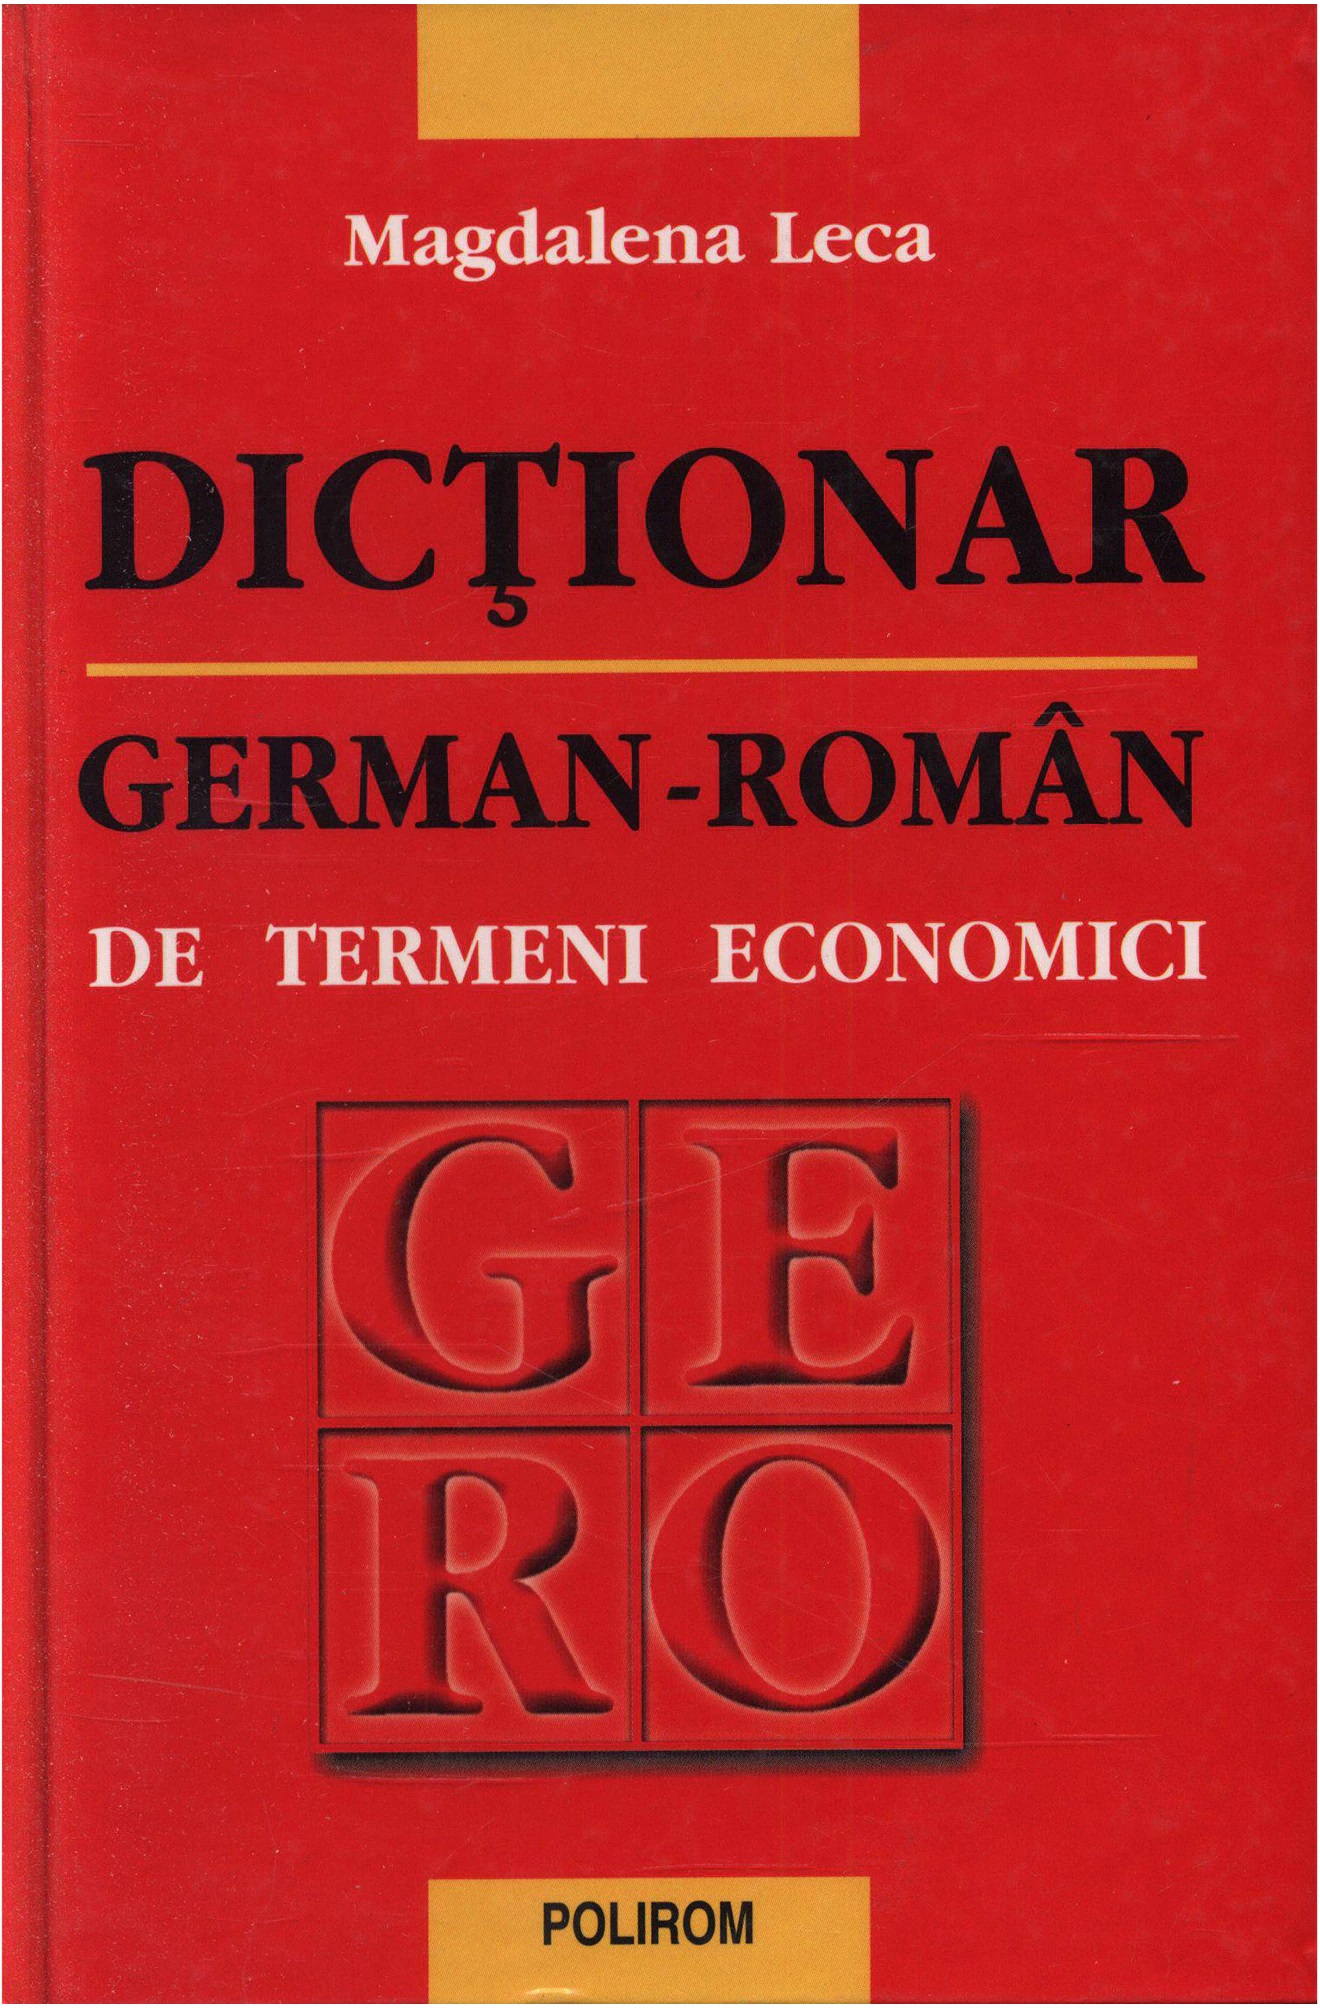 Dictionar economic german-roman | Magdalena Leca